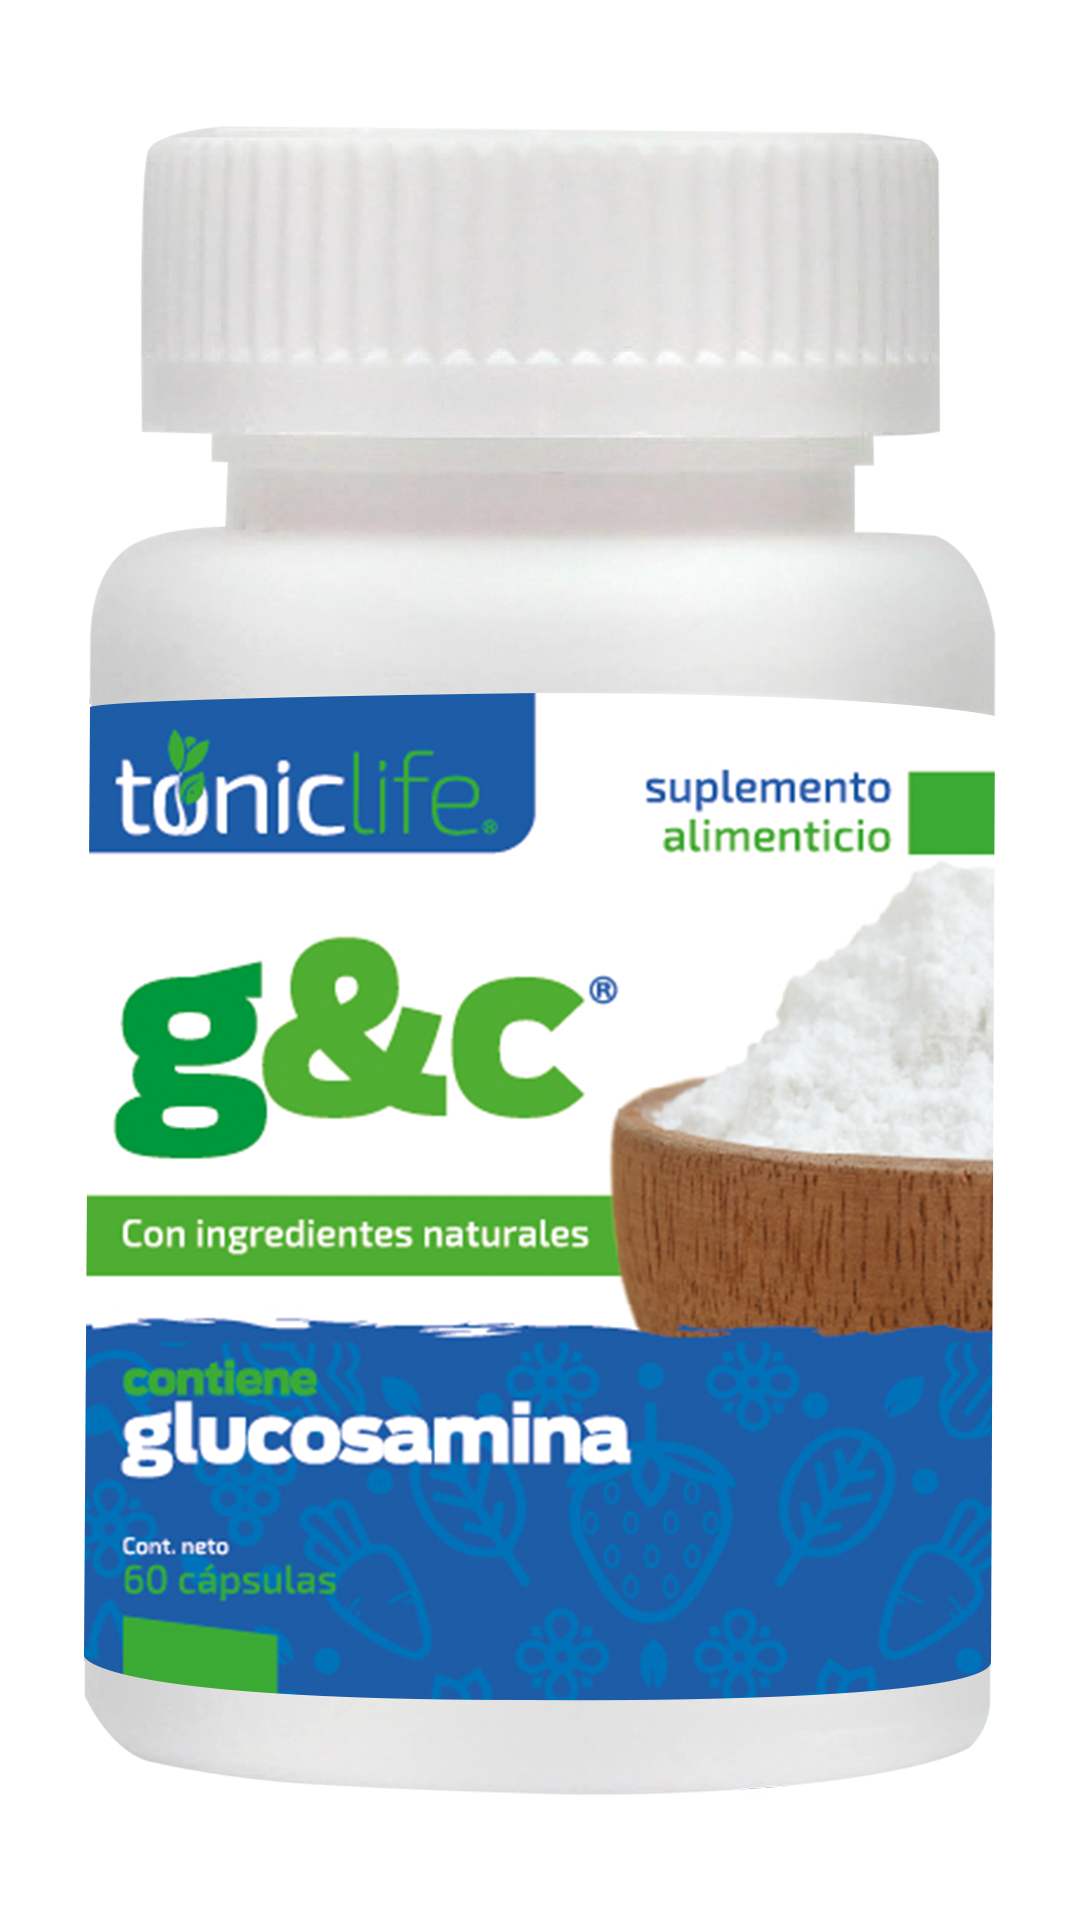 G&C 60 Caps Glucosamina Apoyo Articular